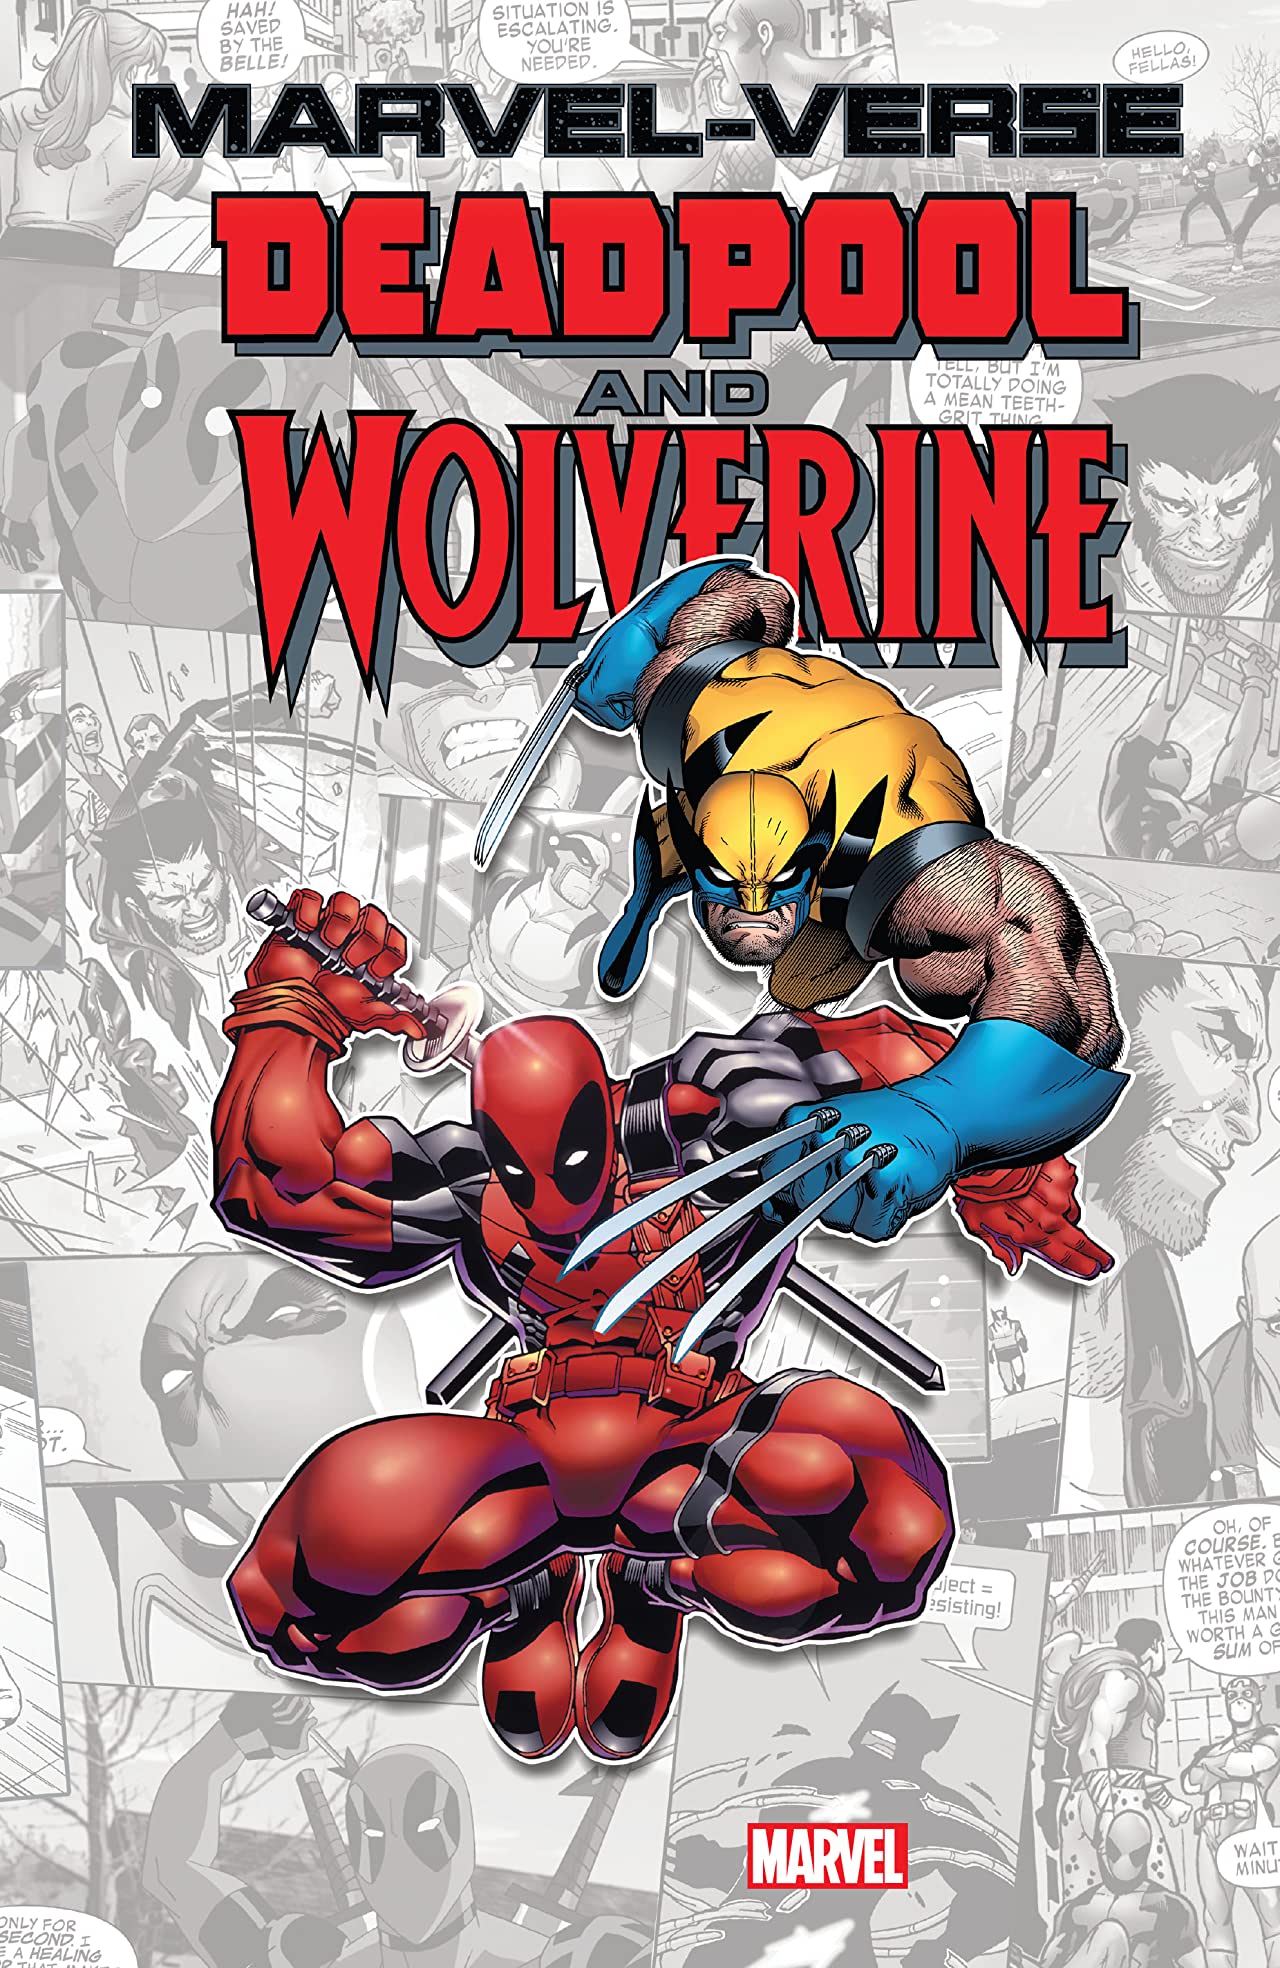 Marvel-Verse Graphic Novel Volume 6 Deadpool And Wolverine